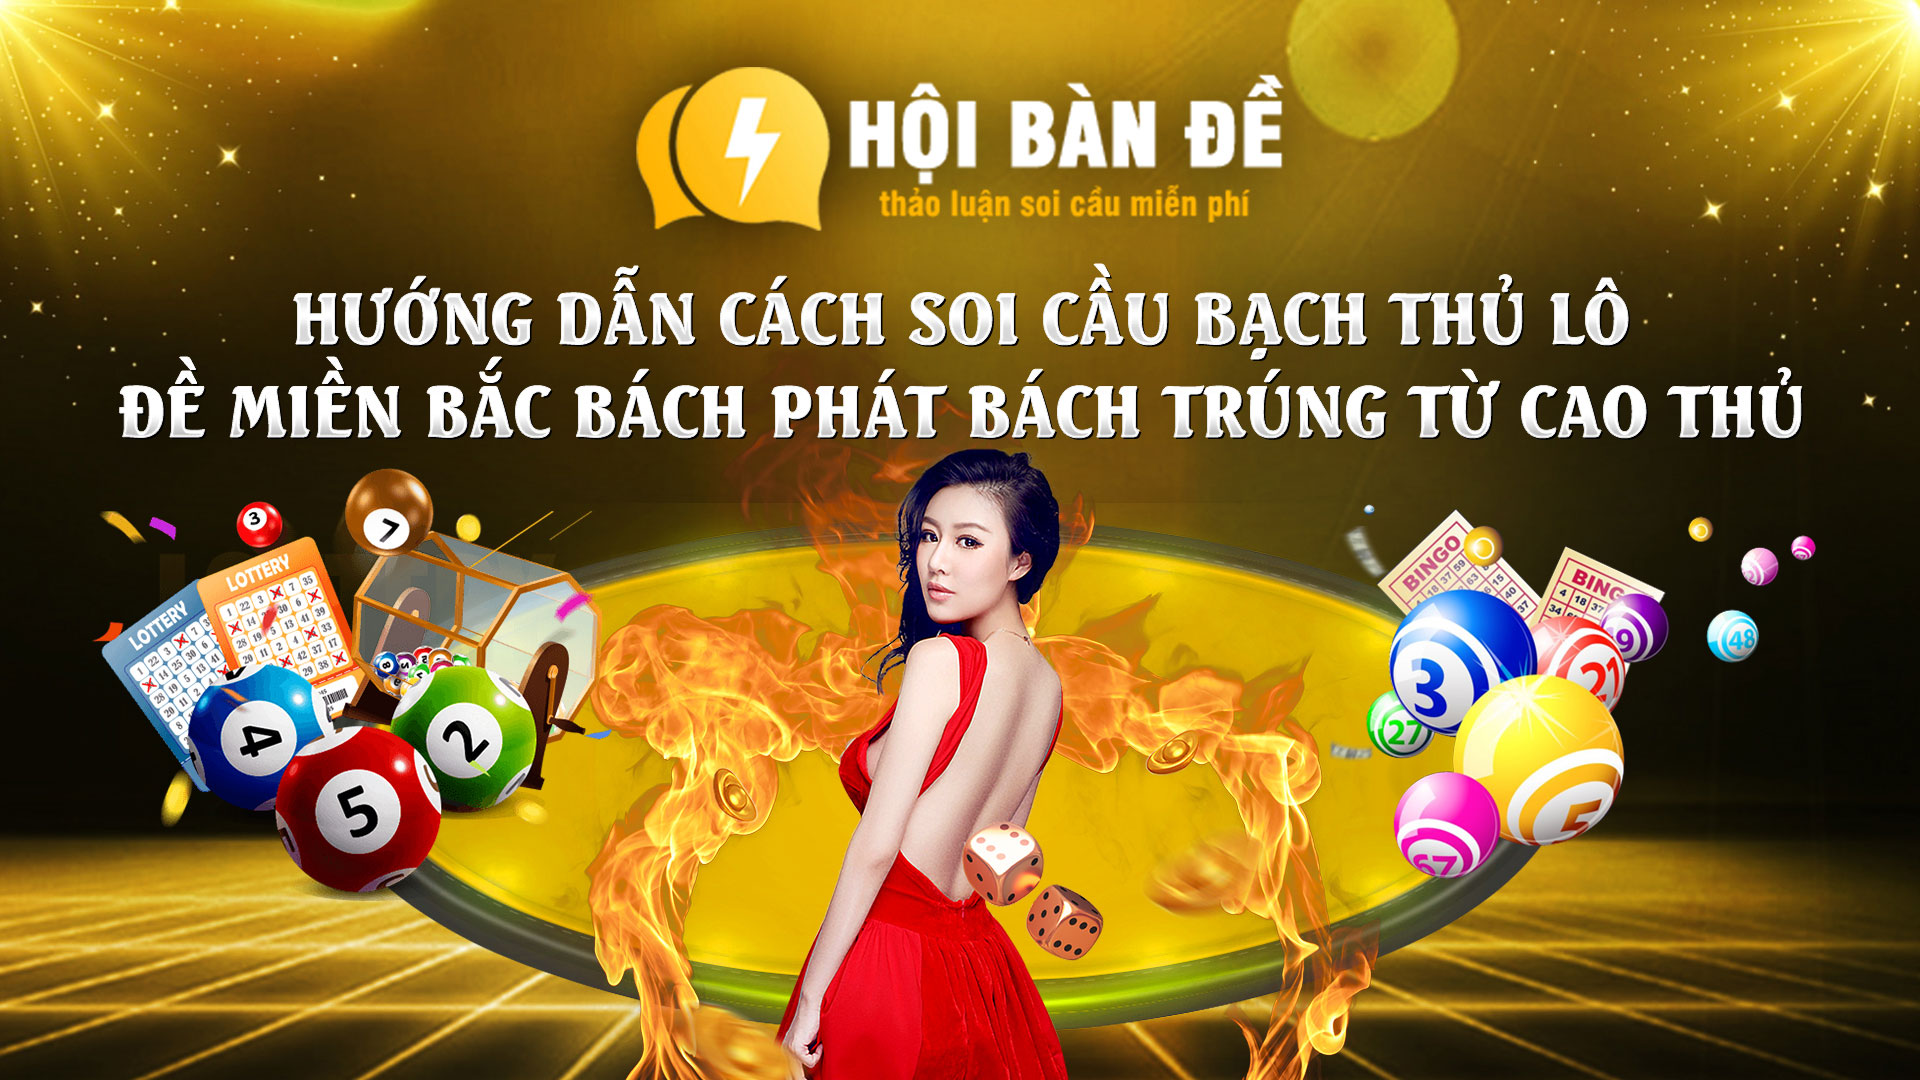 Bach Thu Lo La Gi Top 5 Phuong Phap Soi Cau Bach Thu Lo Cuc Chuan Tu Cao Thu 1665136221